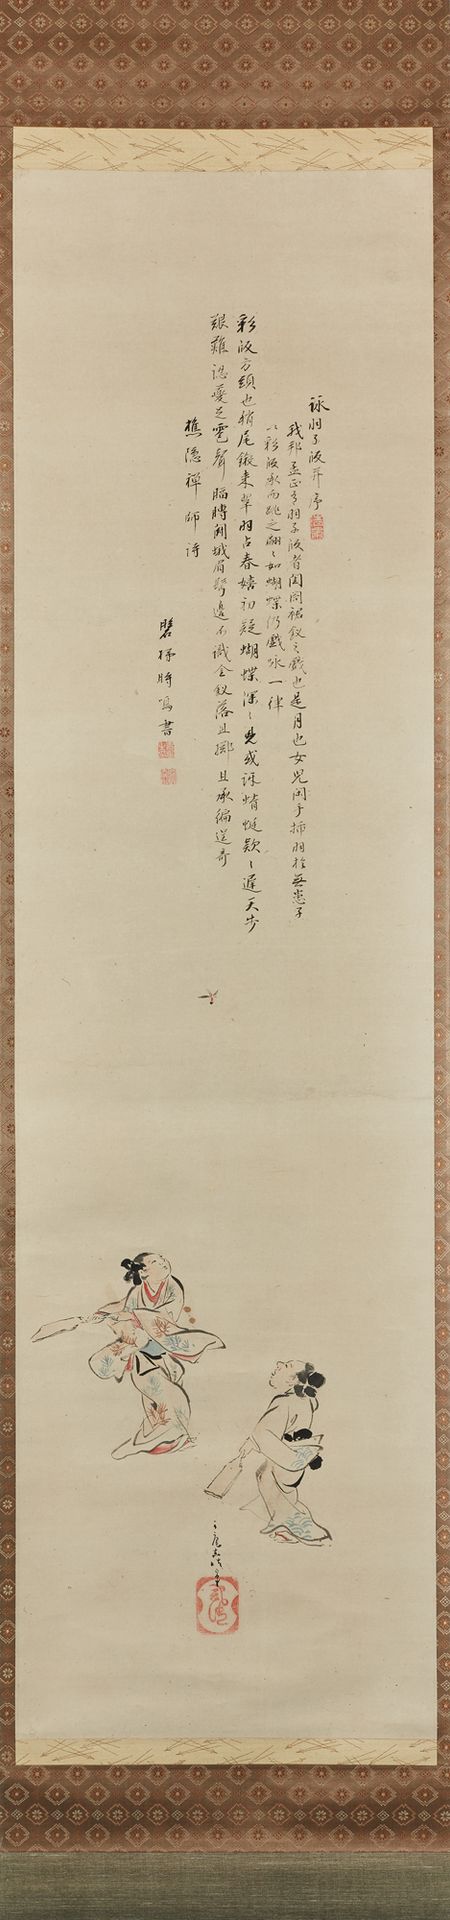 Kita Busei (1776-1856) 纸上水墨，两个年轻女子在玩球。
签名为Kita，盖章为Busei。
尺寸107 x 28,5厘米。
安装为kake&hellip;